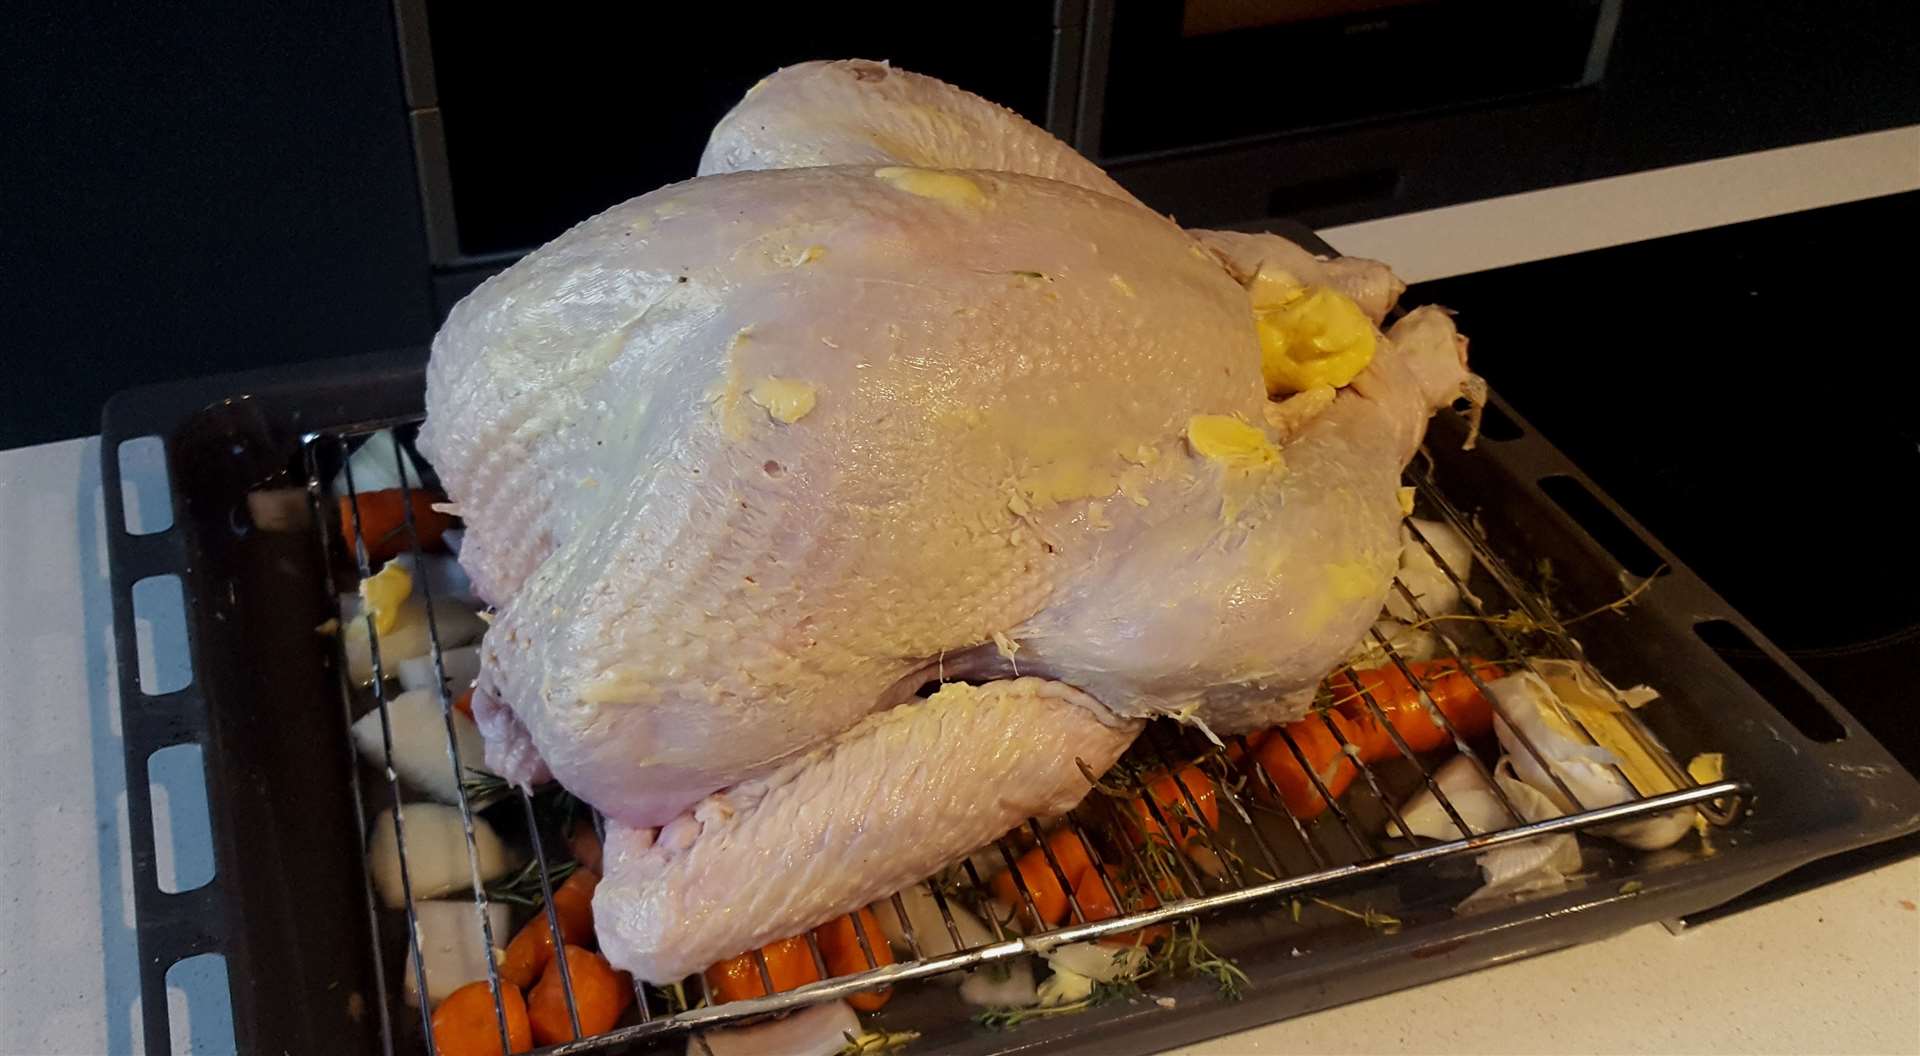 The prepped turkey ready to roast